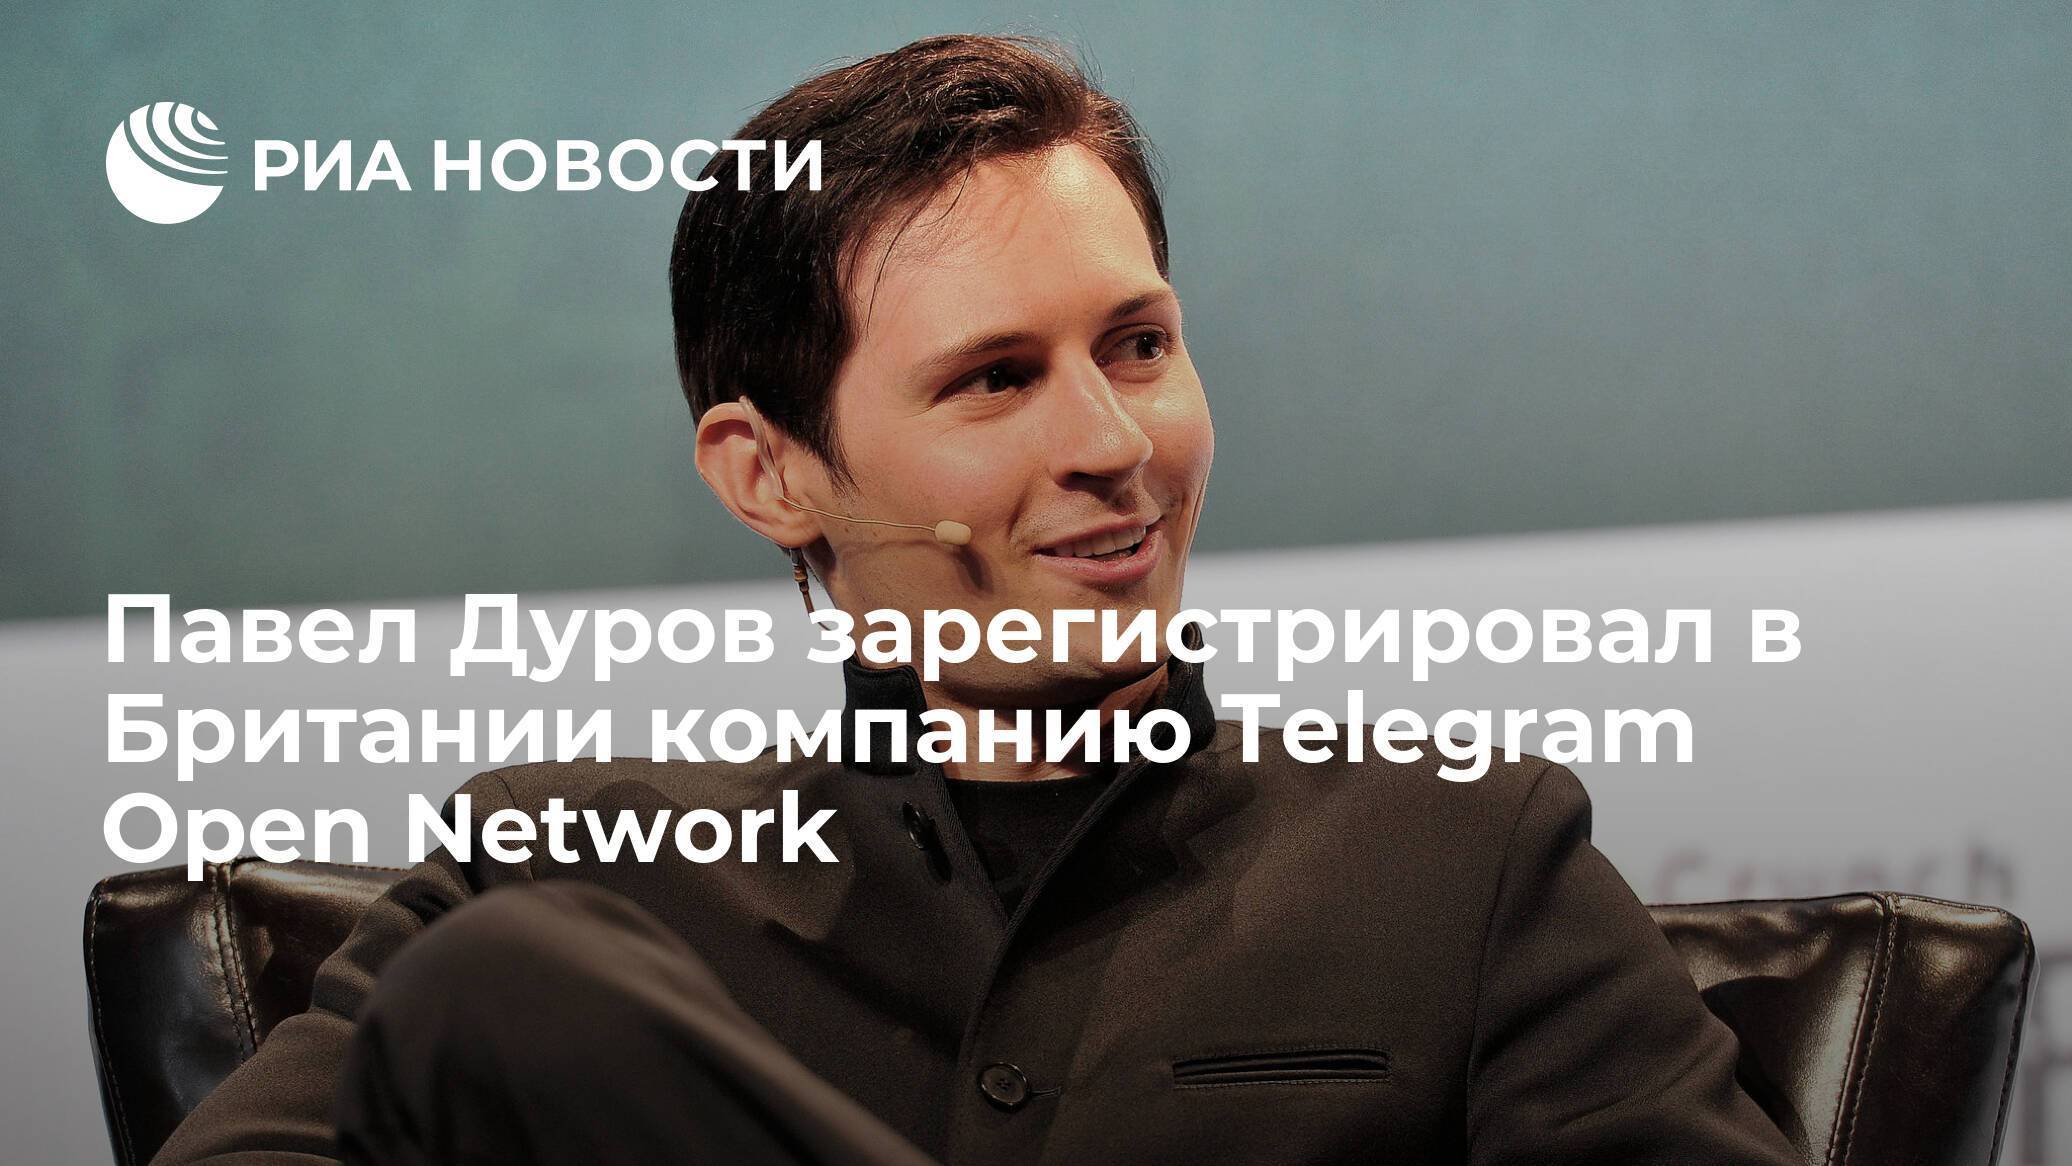 Павел Дуров гражданство